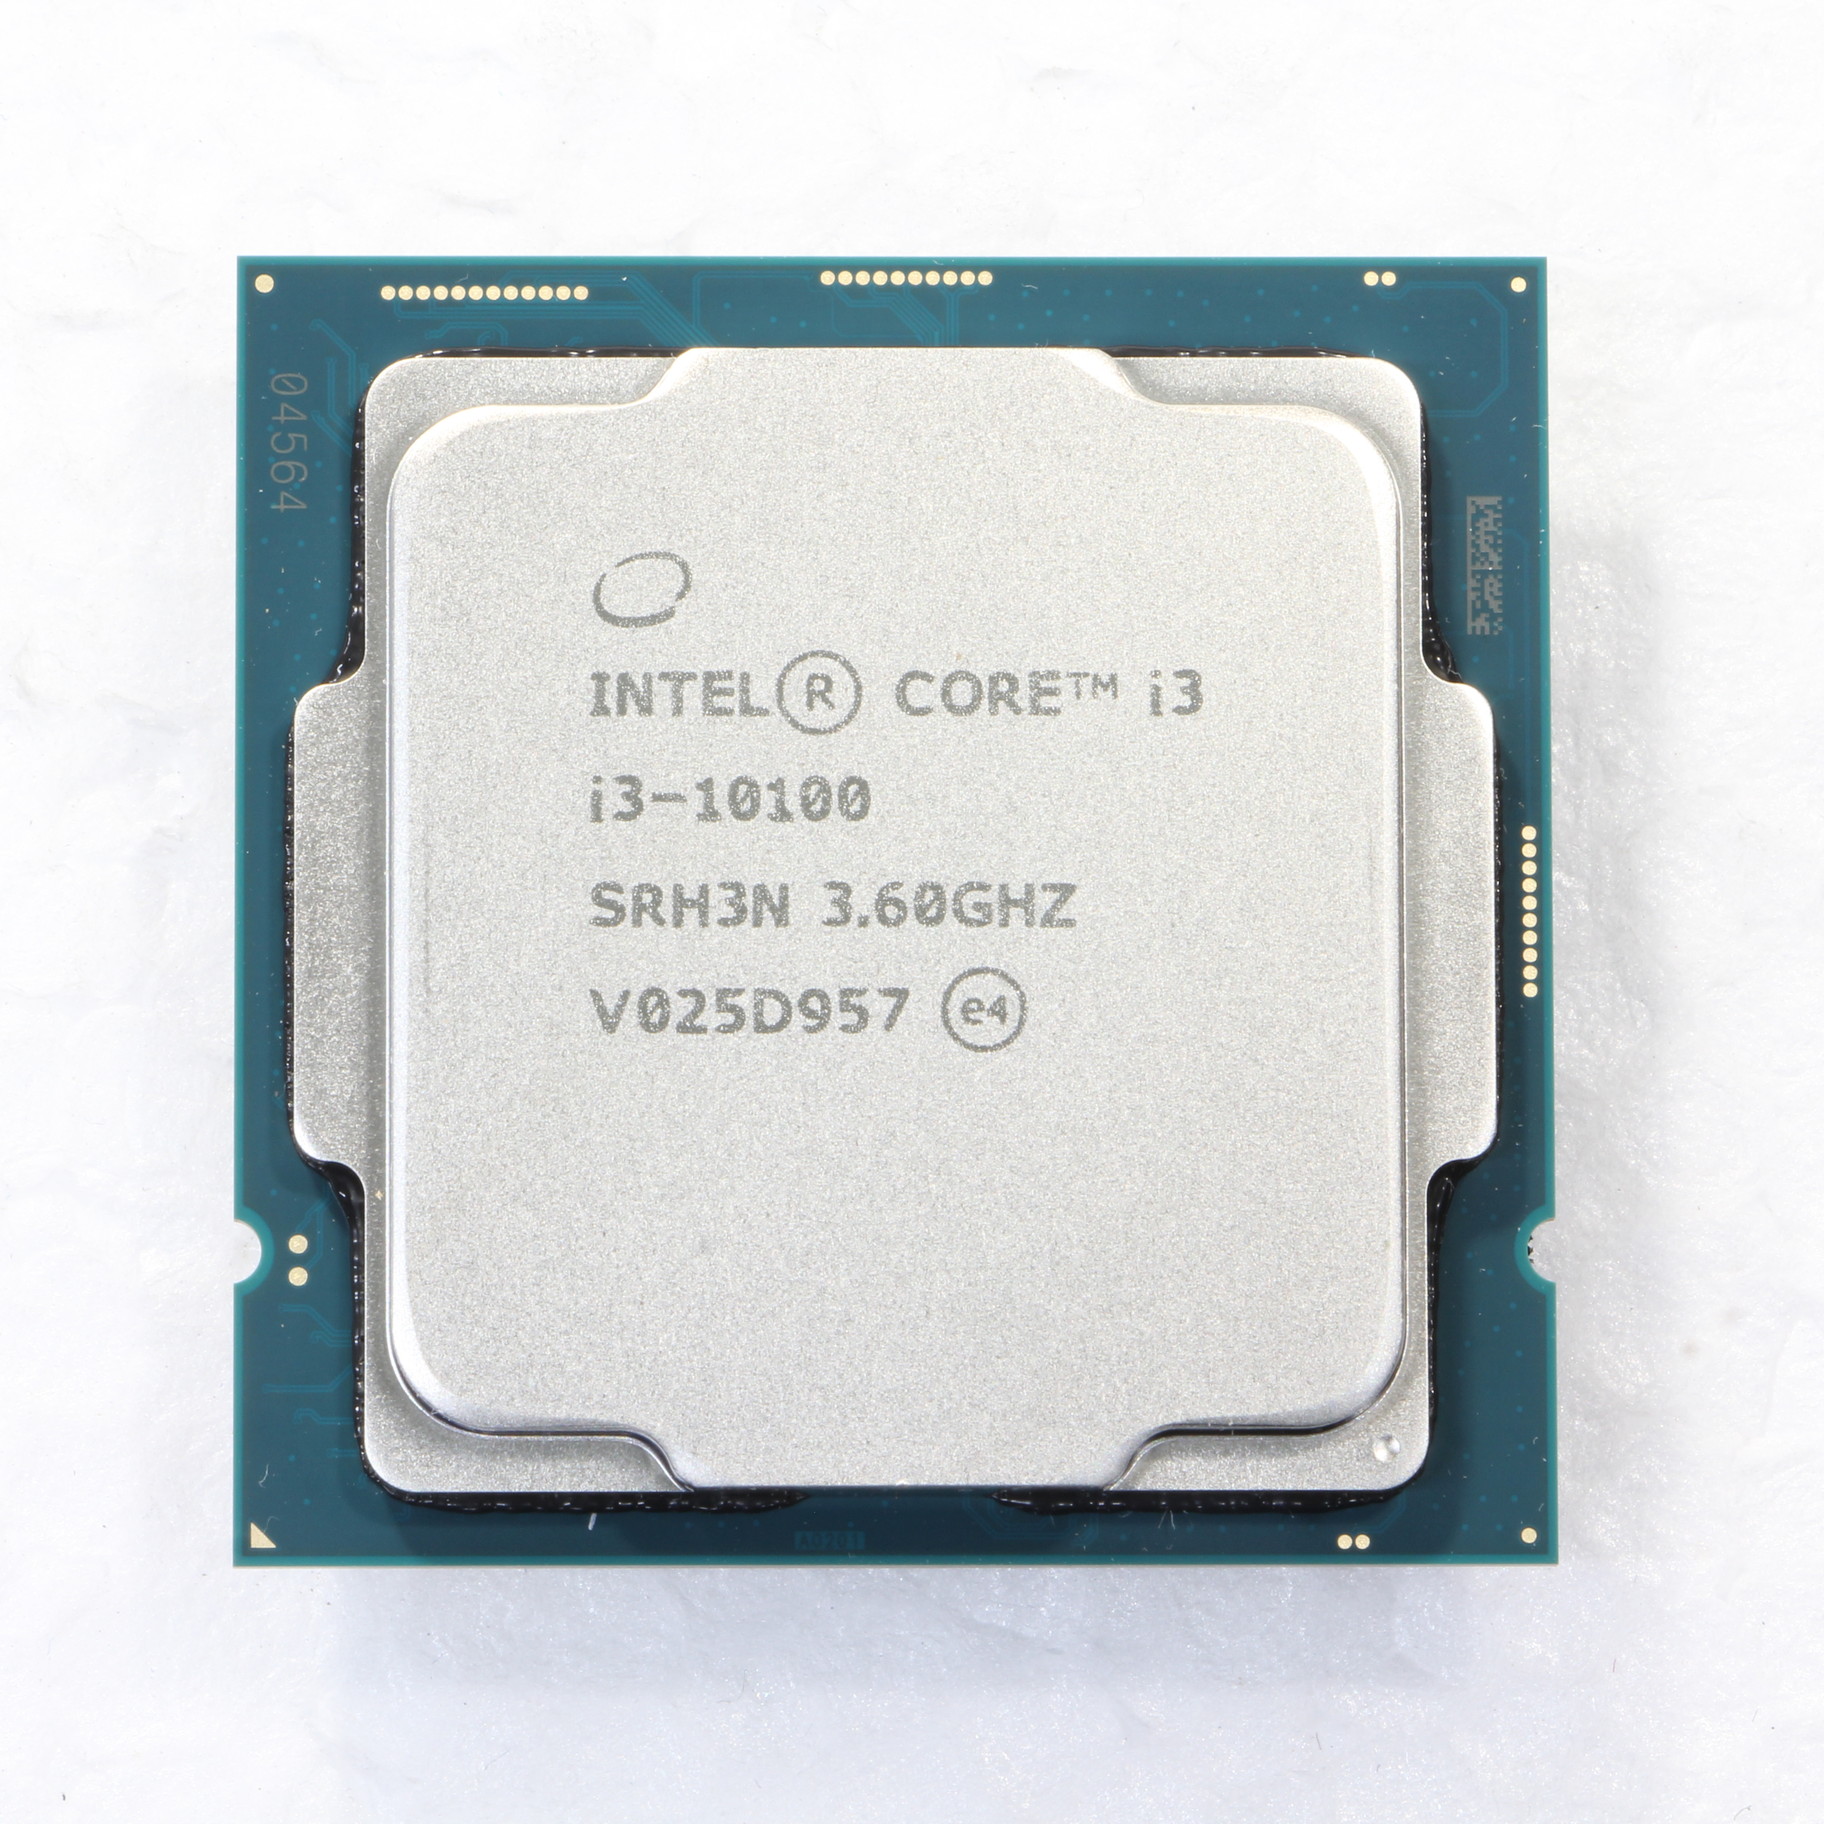 CPU i3-10100 LGA1200 3.6GHz